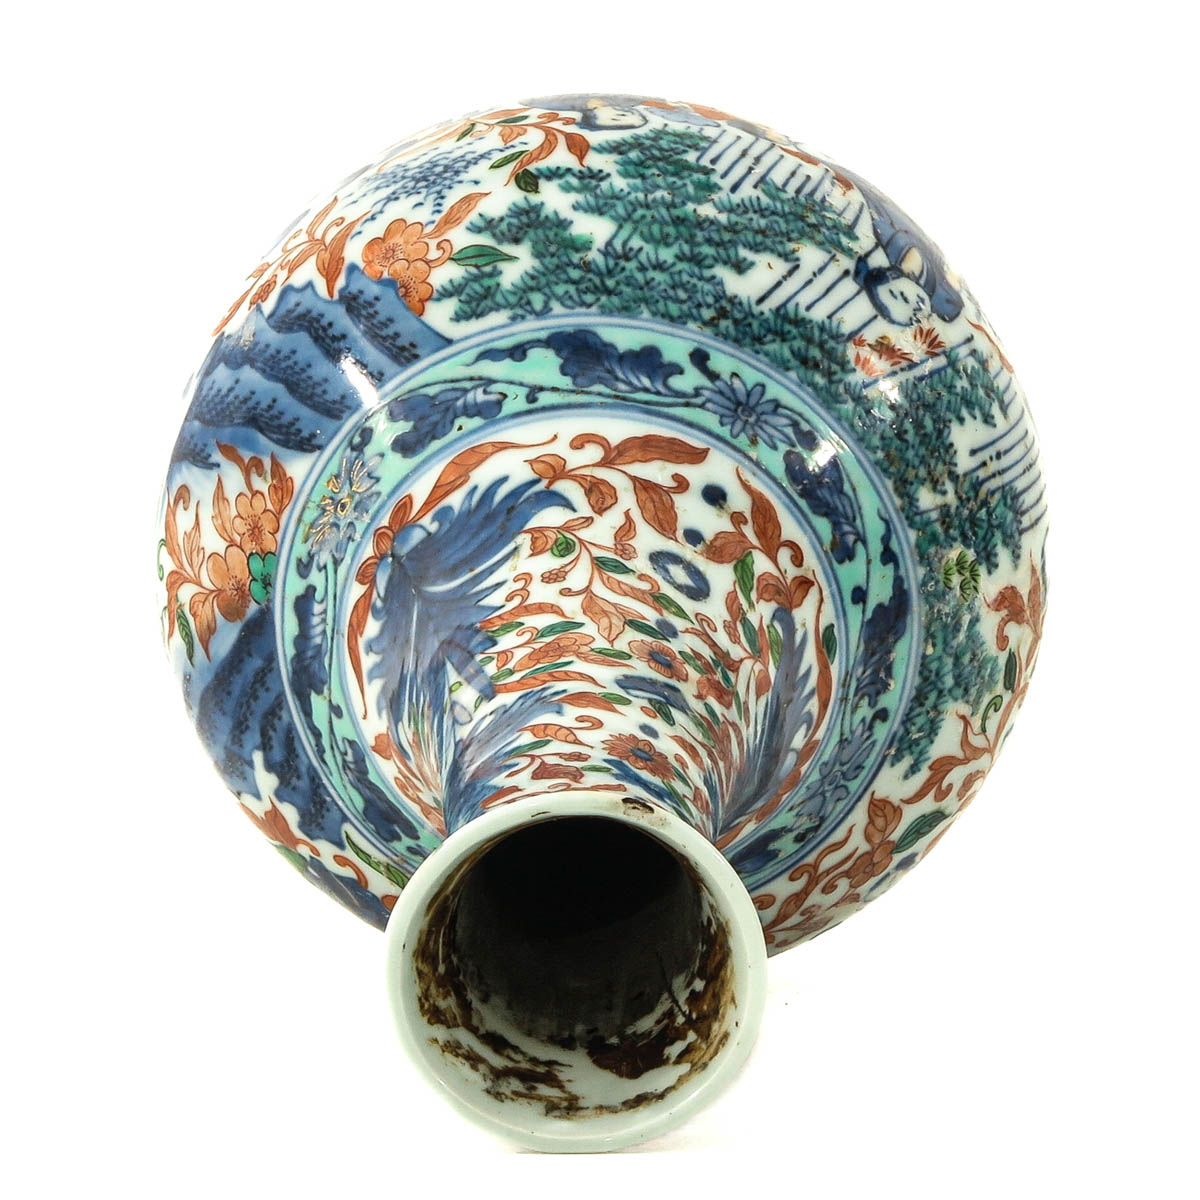 A Polychrome Decor Bottle Vase - Image 5 of 10